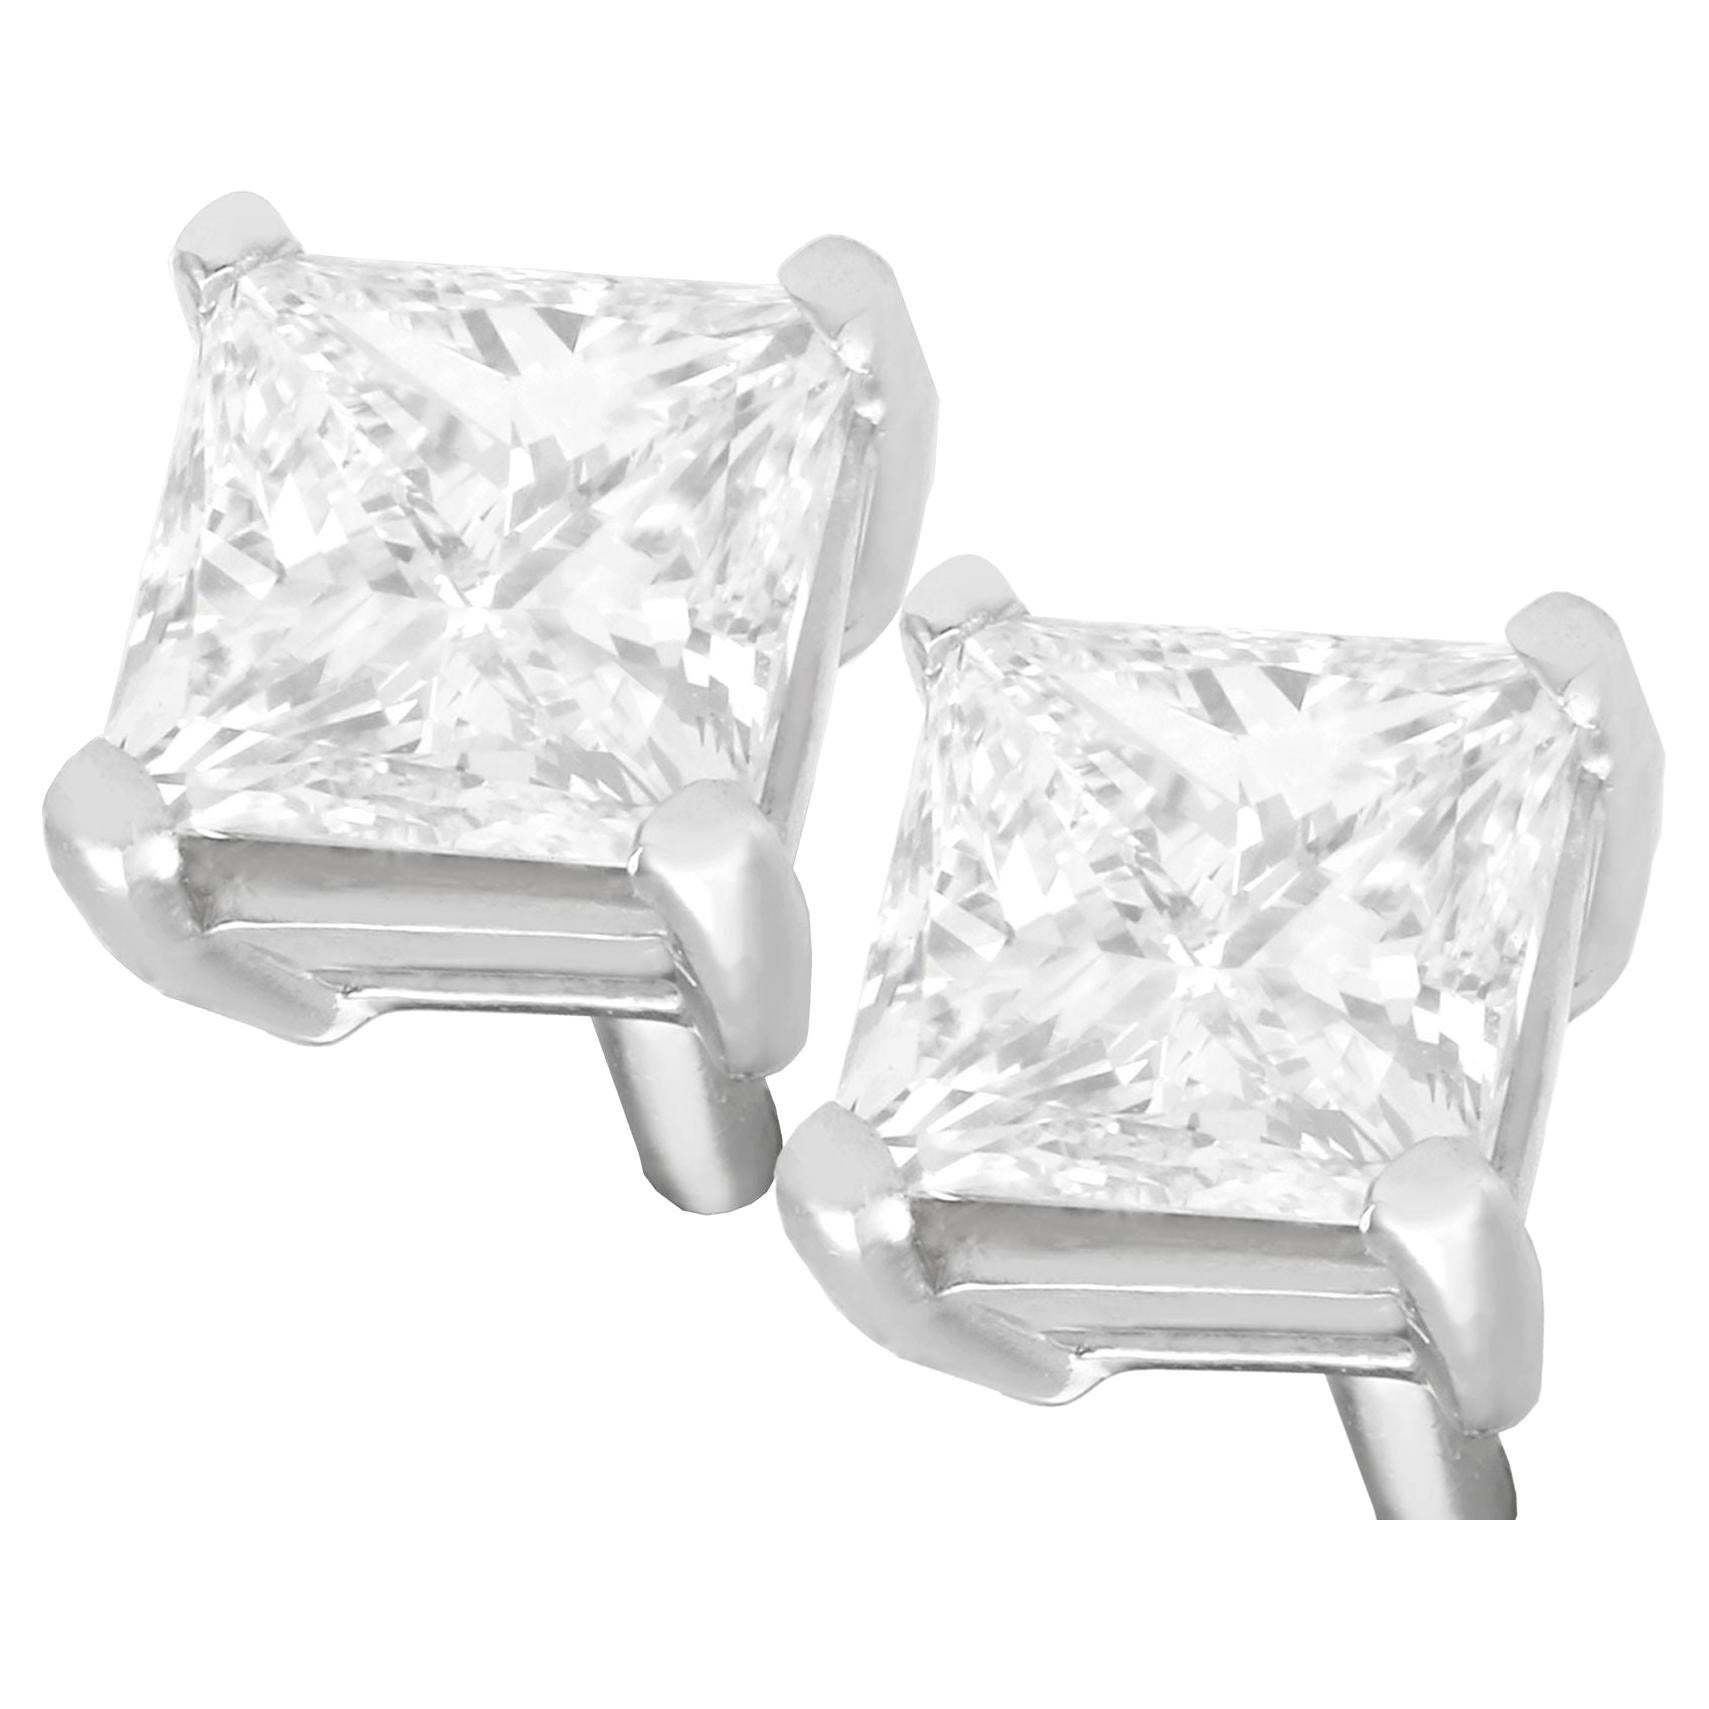 1.41 Carat Princess Cut Diamond and Platinum Stud Earrings For Sale